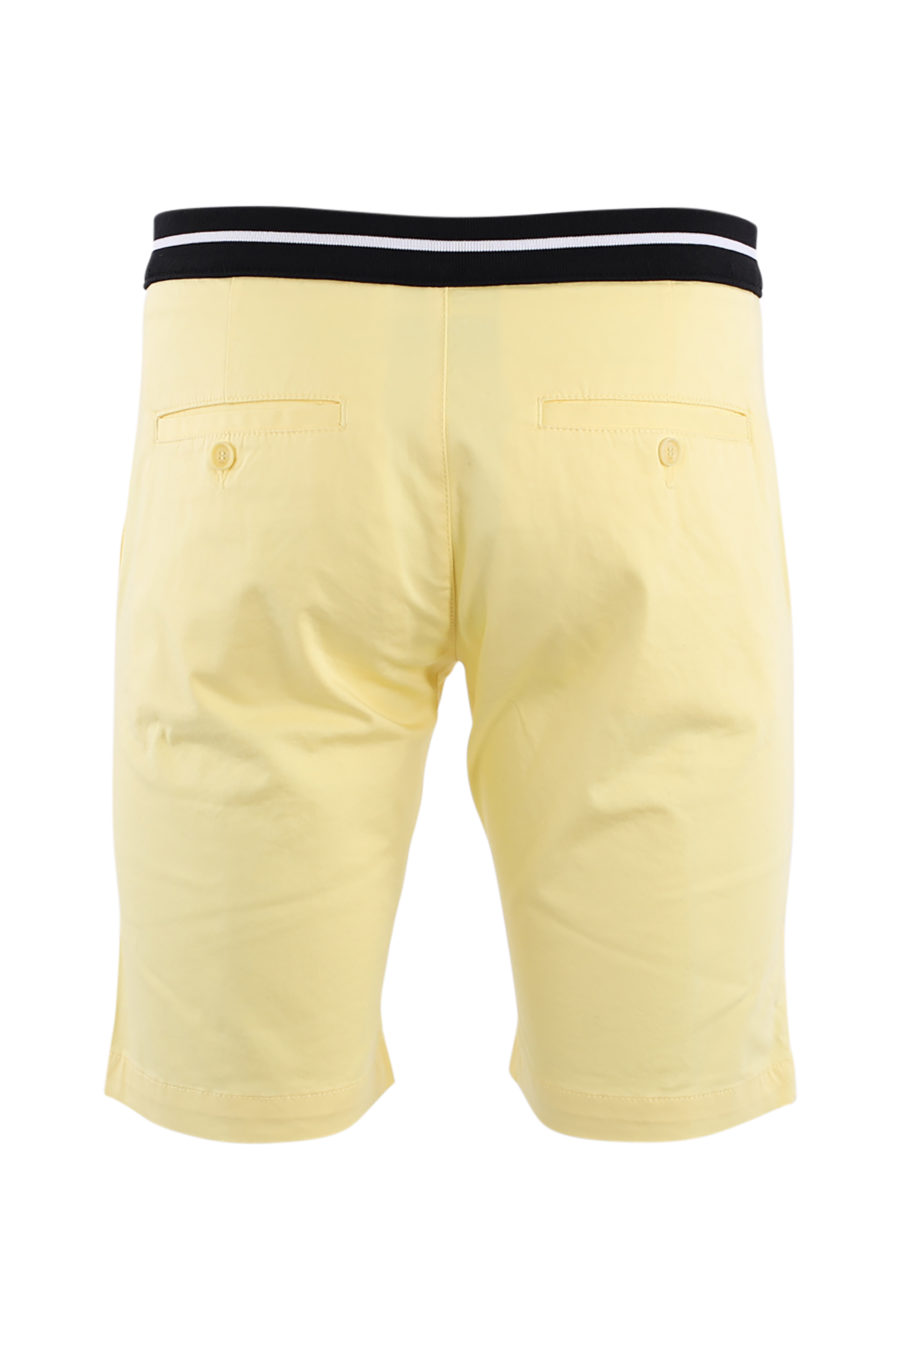 Pantalón corto amarillo - IMG 8854